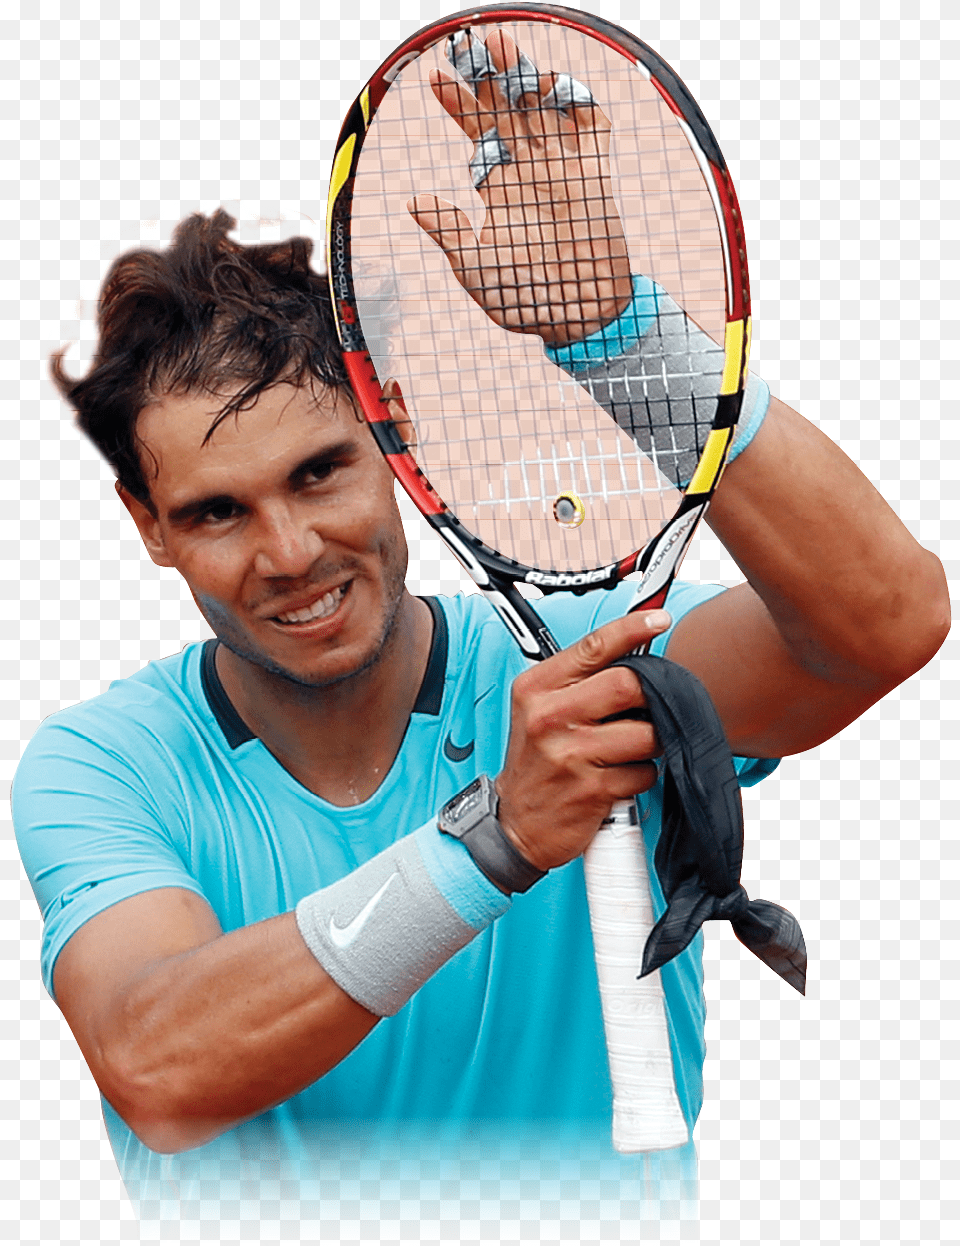 Rafael Nadal Rakieta, Tennis Racket, Tennis, Sport, Racket Png Image